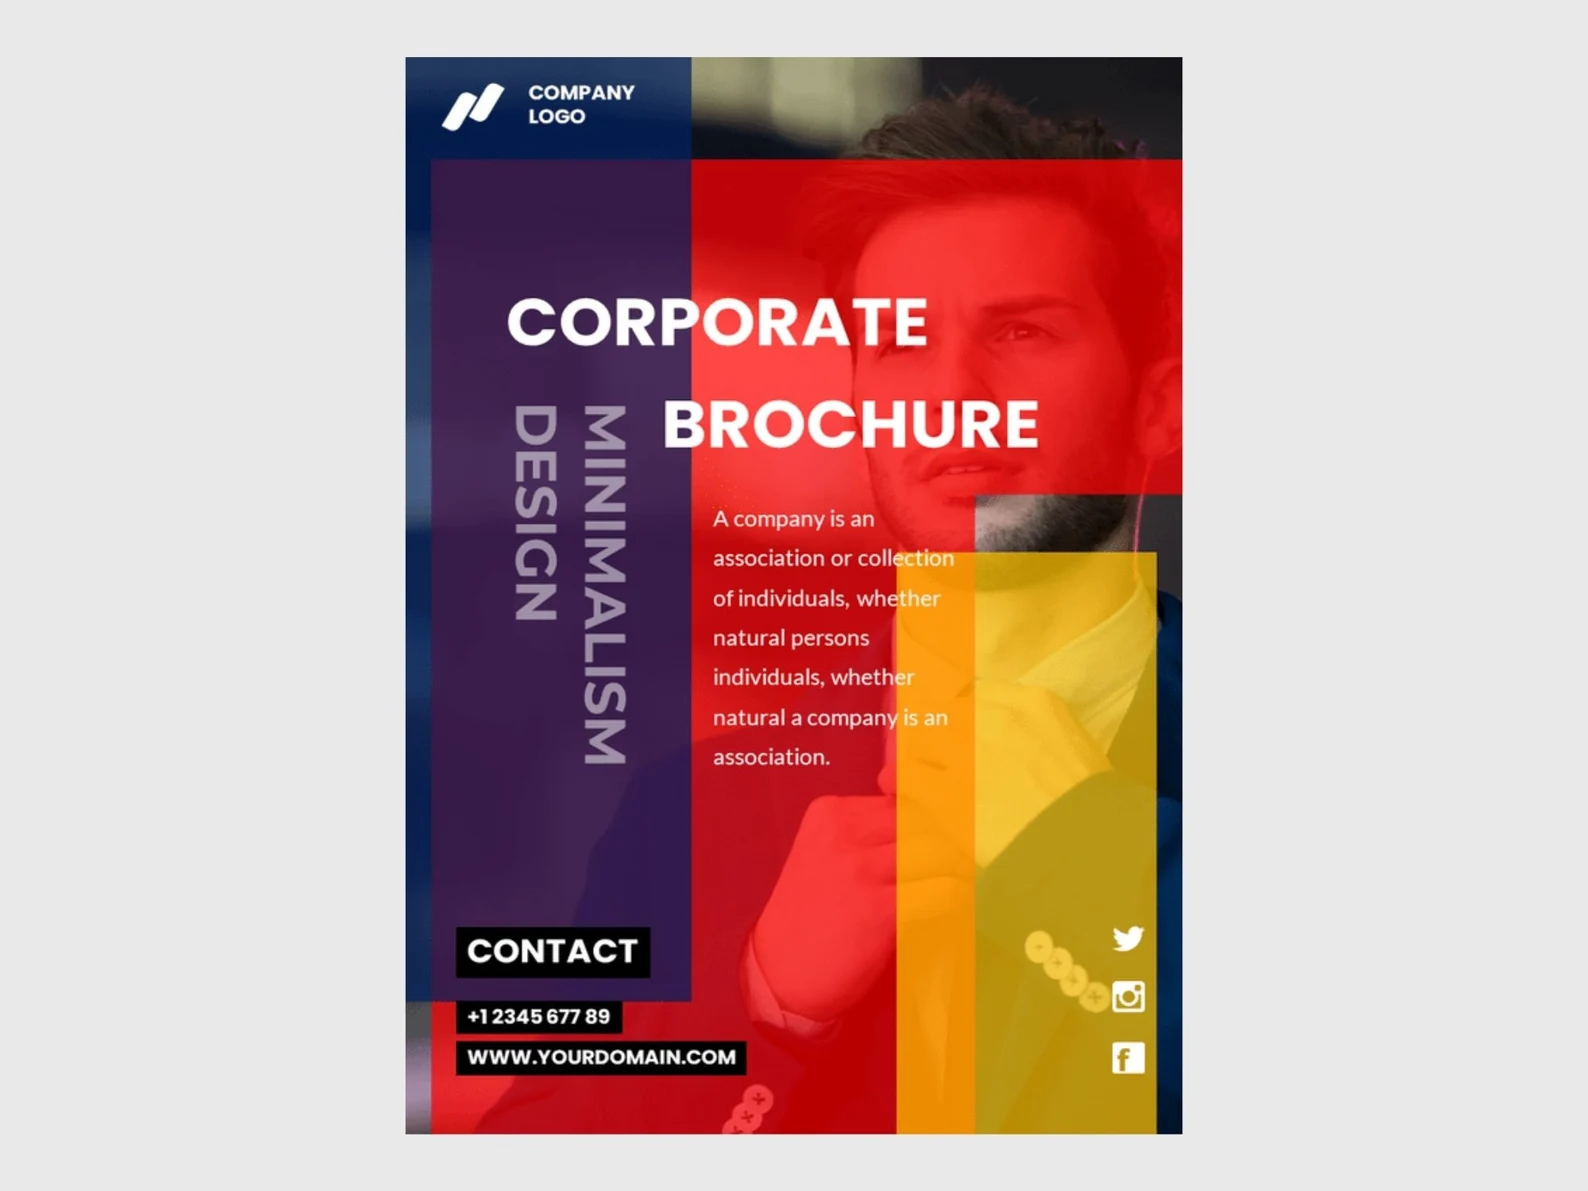 Three color brochure in the creative design.